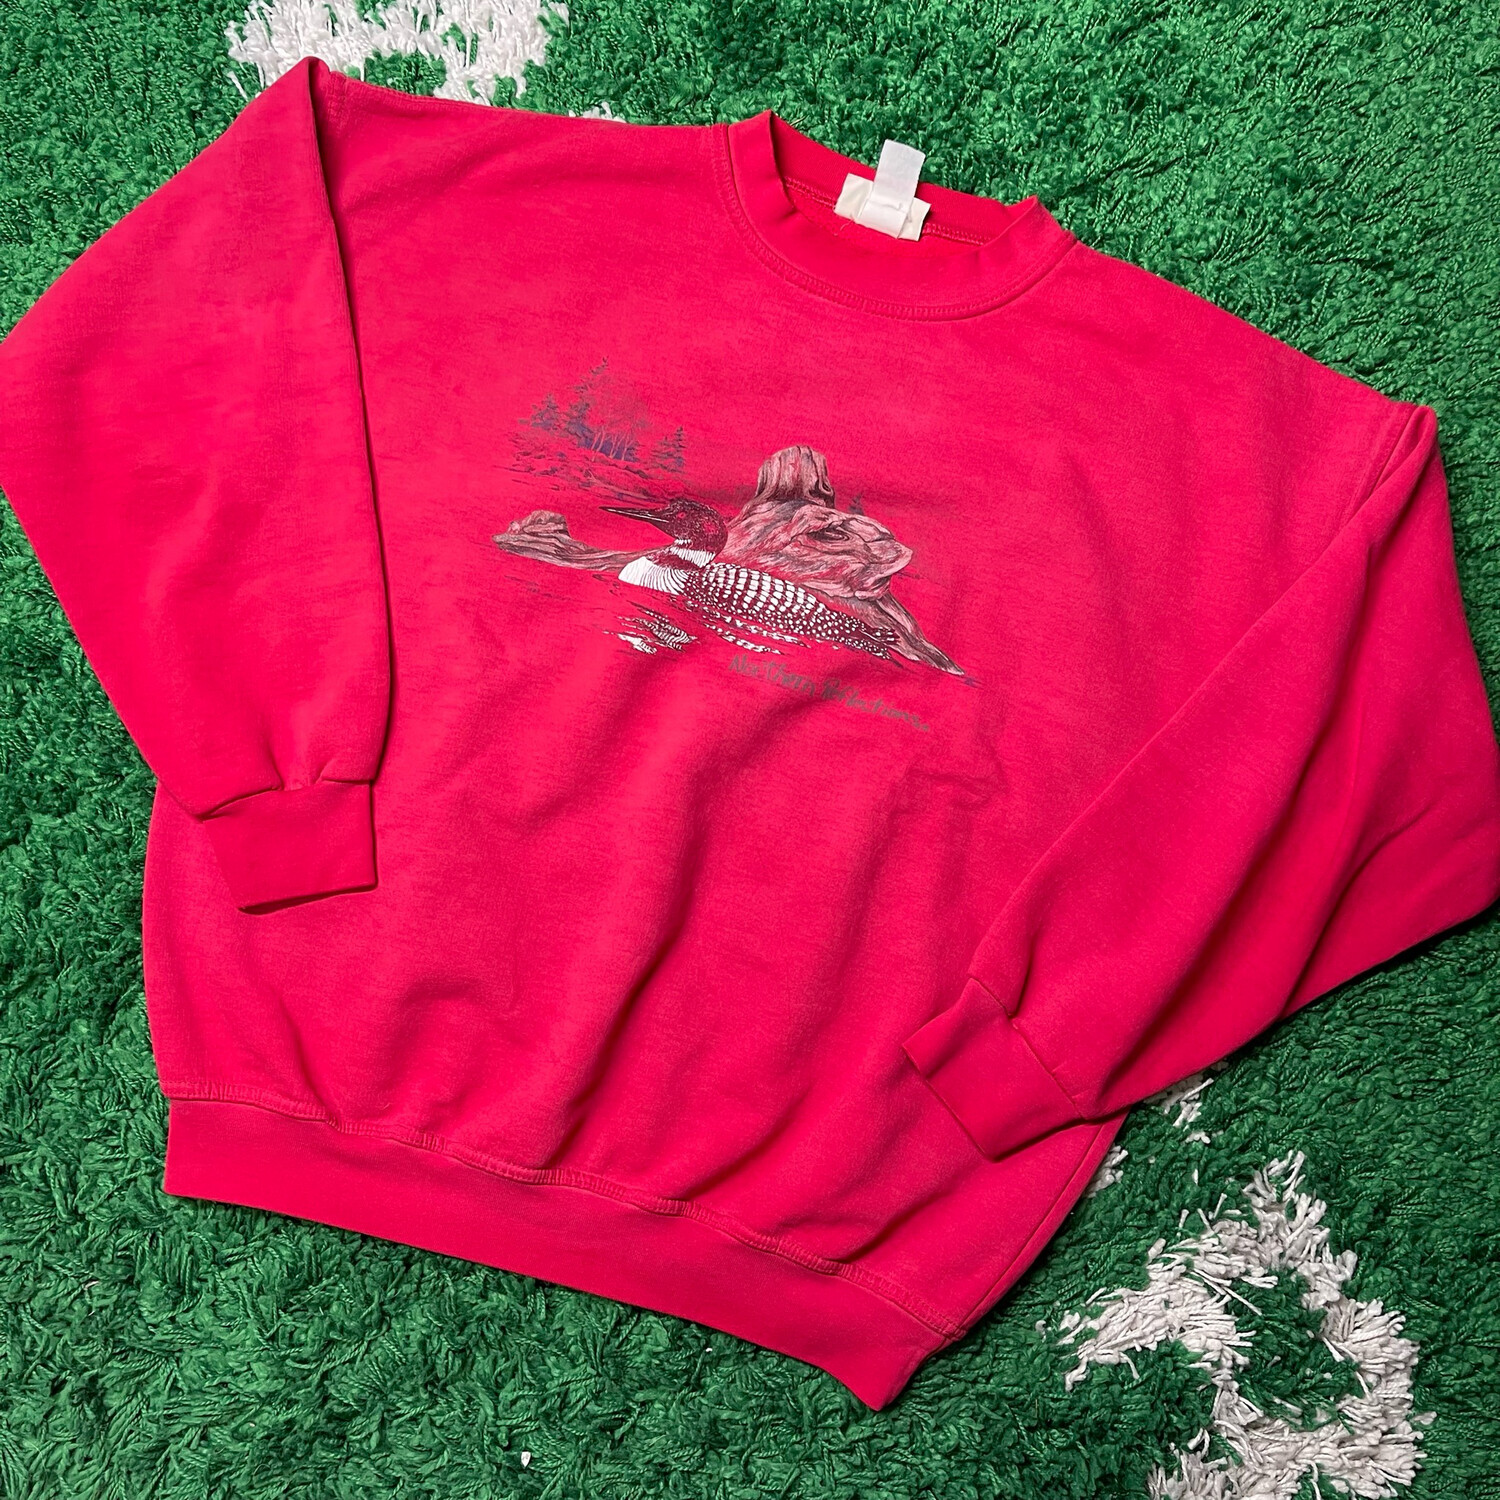 Northern Reflections Red Crewneck Sweatshirt Size Large